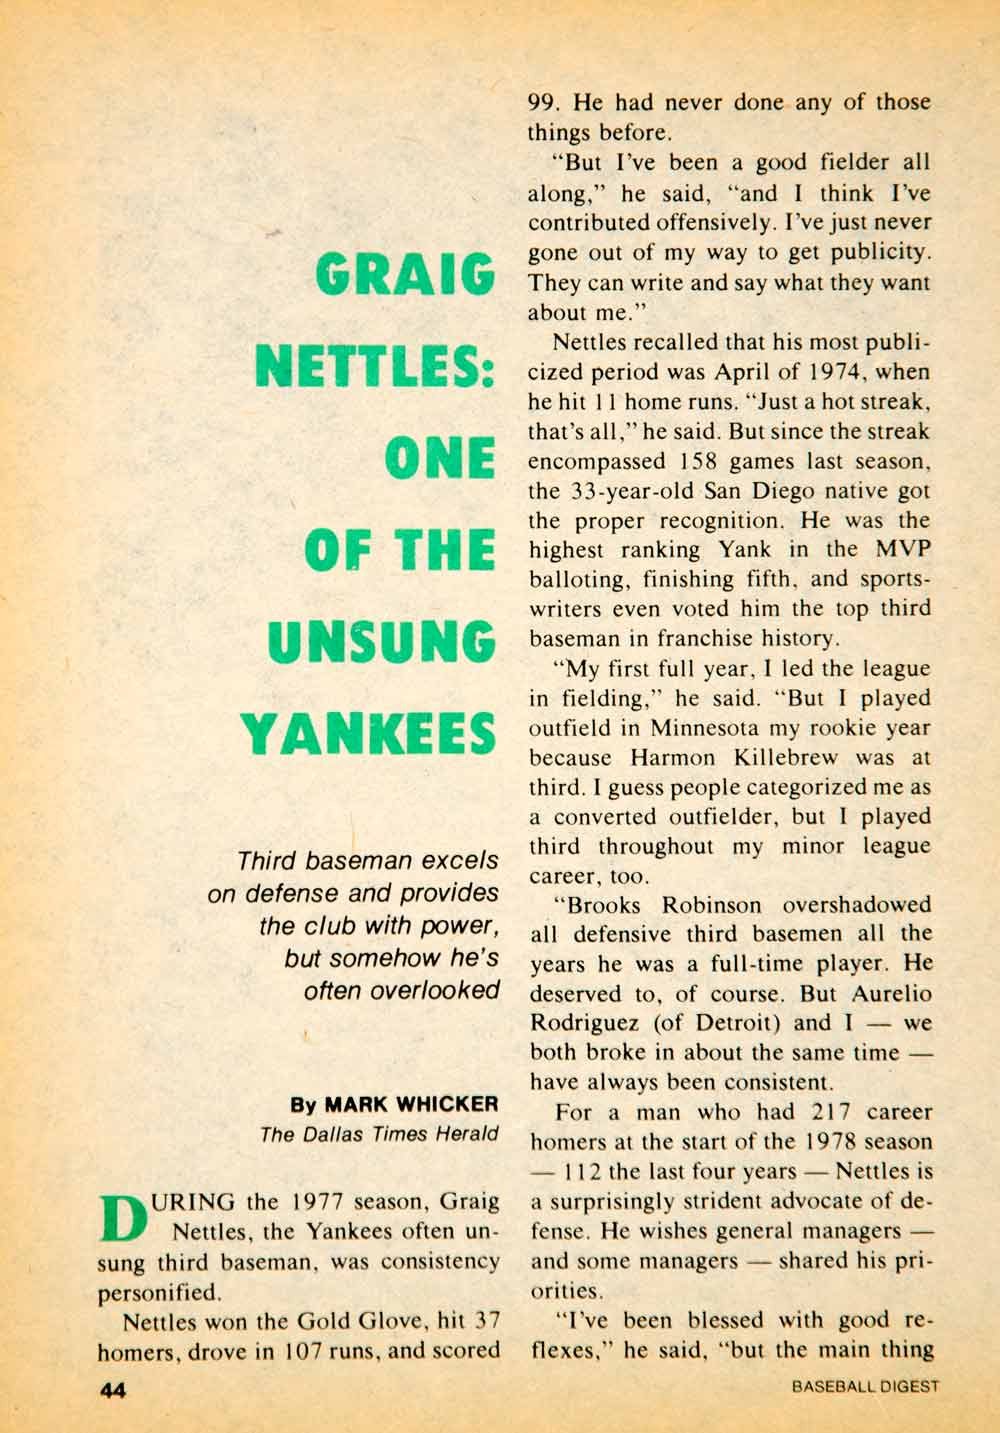 1978 Article MLB Baseball Sports Memorabilia Graig Nettles New York Yankees YBD1